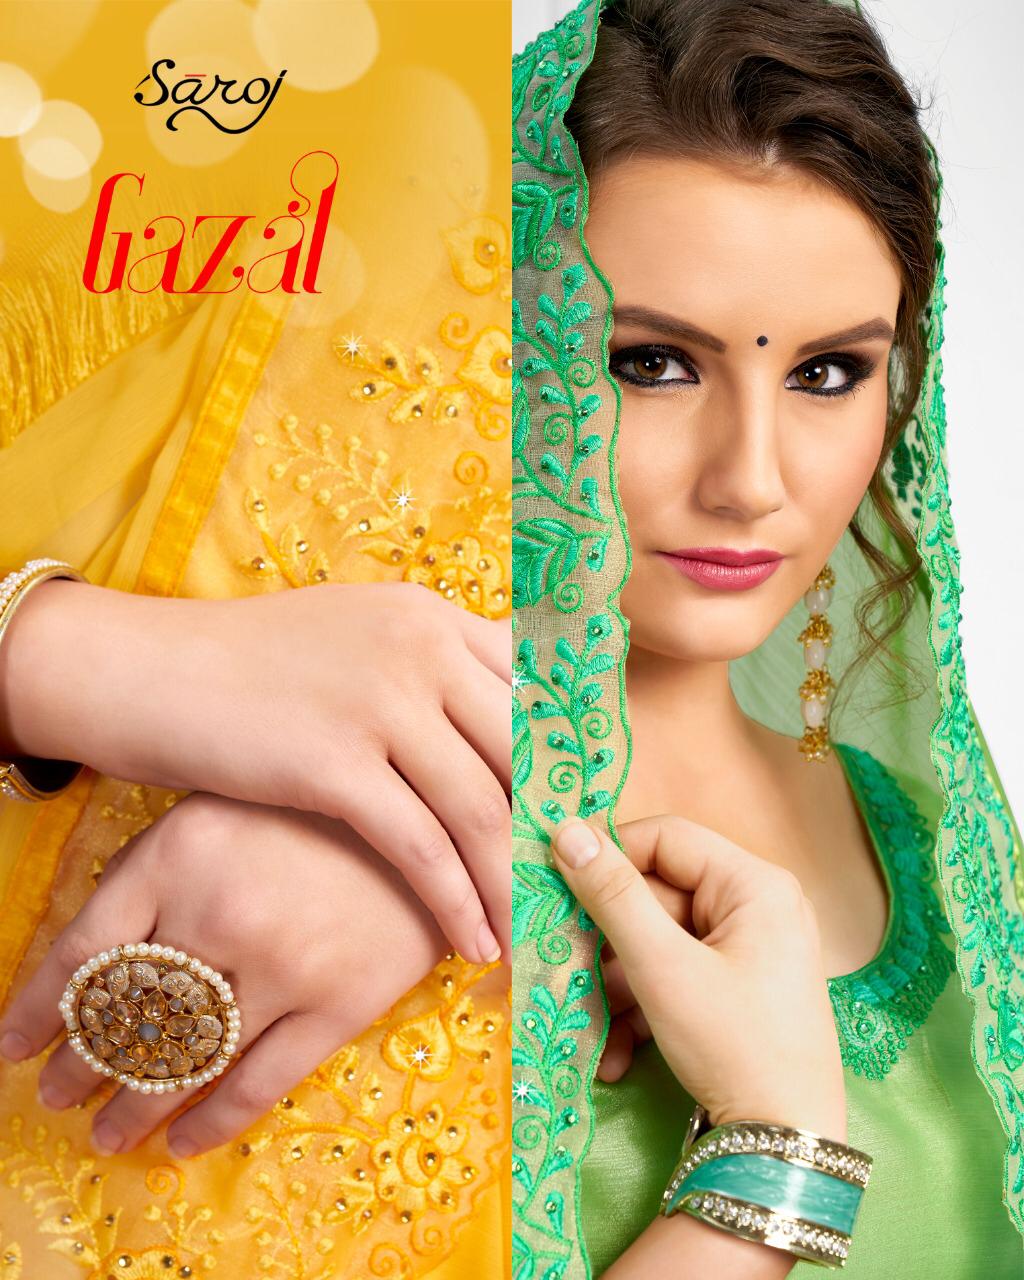 Saroj gazal beautifully designed attractive look Sarees